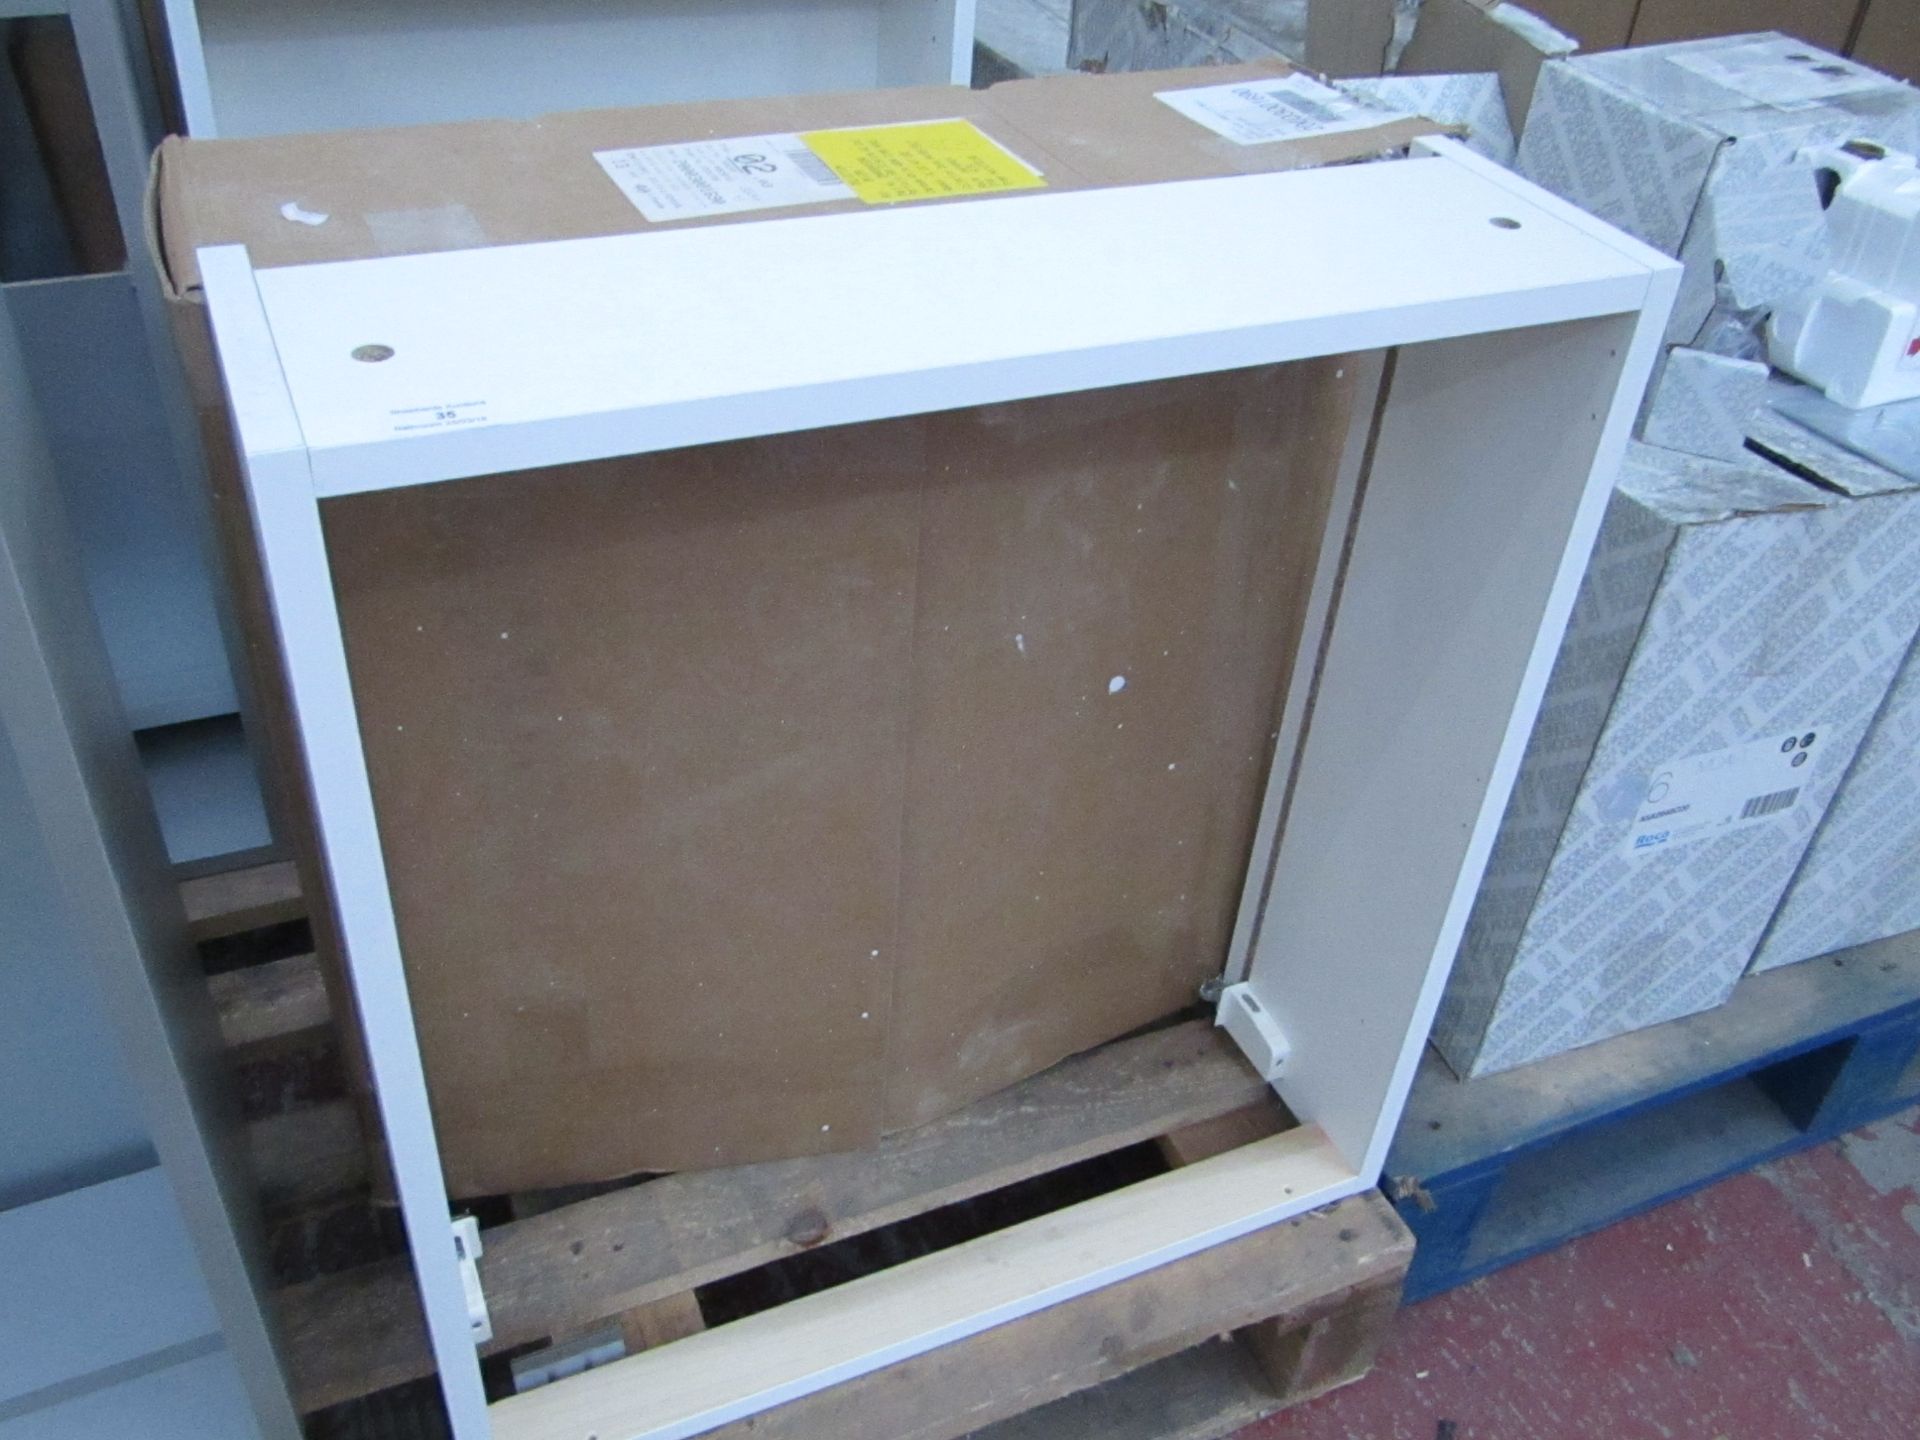 Portfolio 600 slimline WC unit carcase white colour, W600 x D180 x H645, new and boxed.